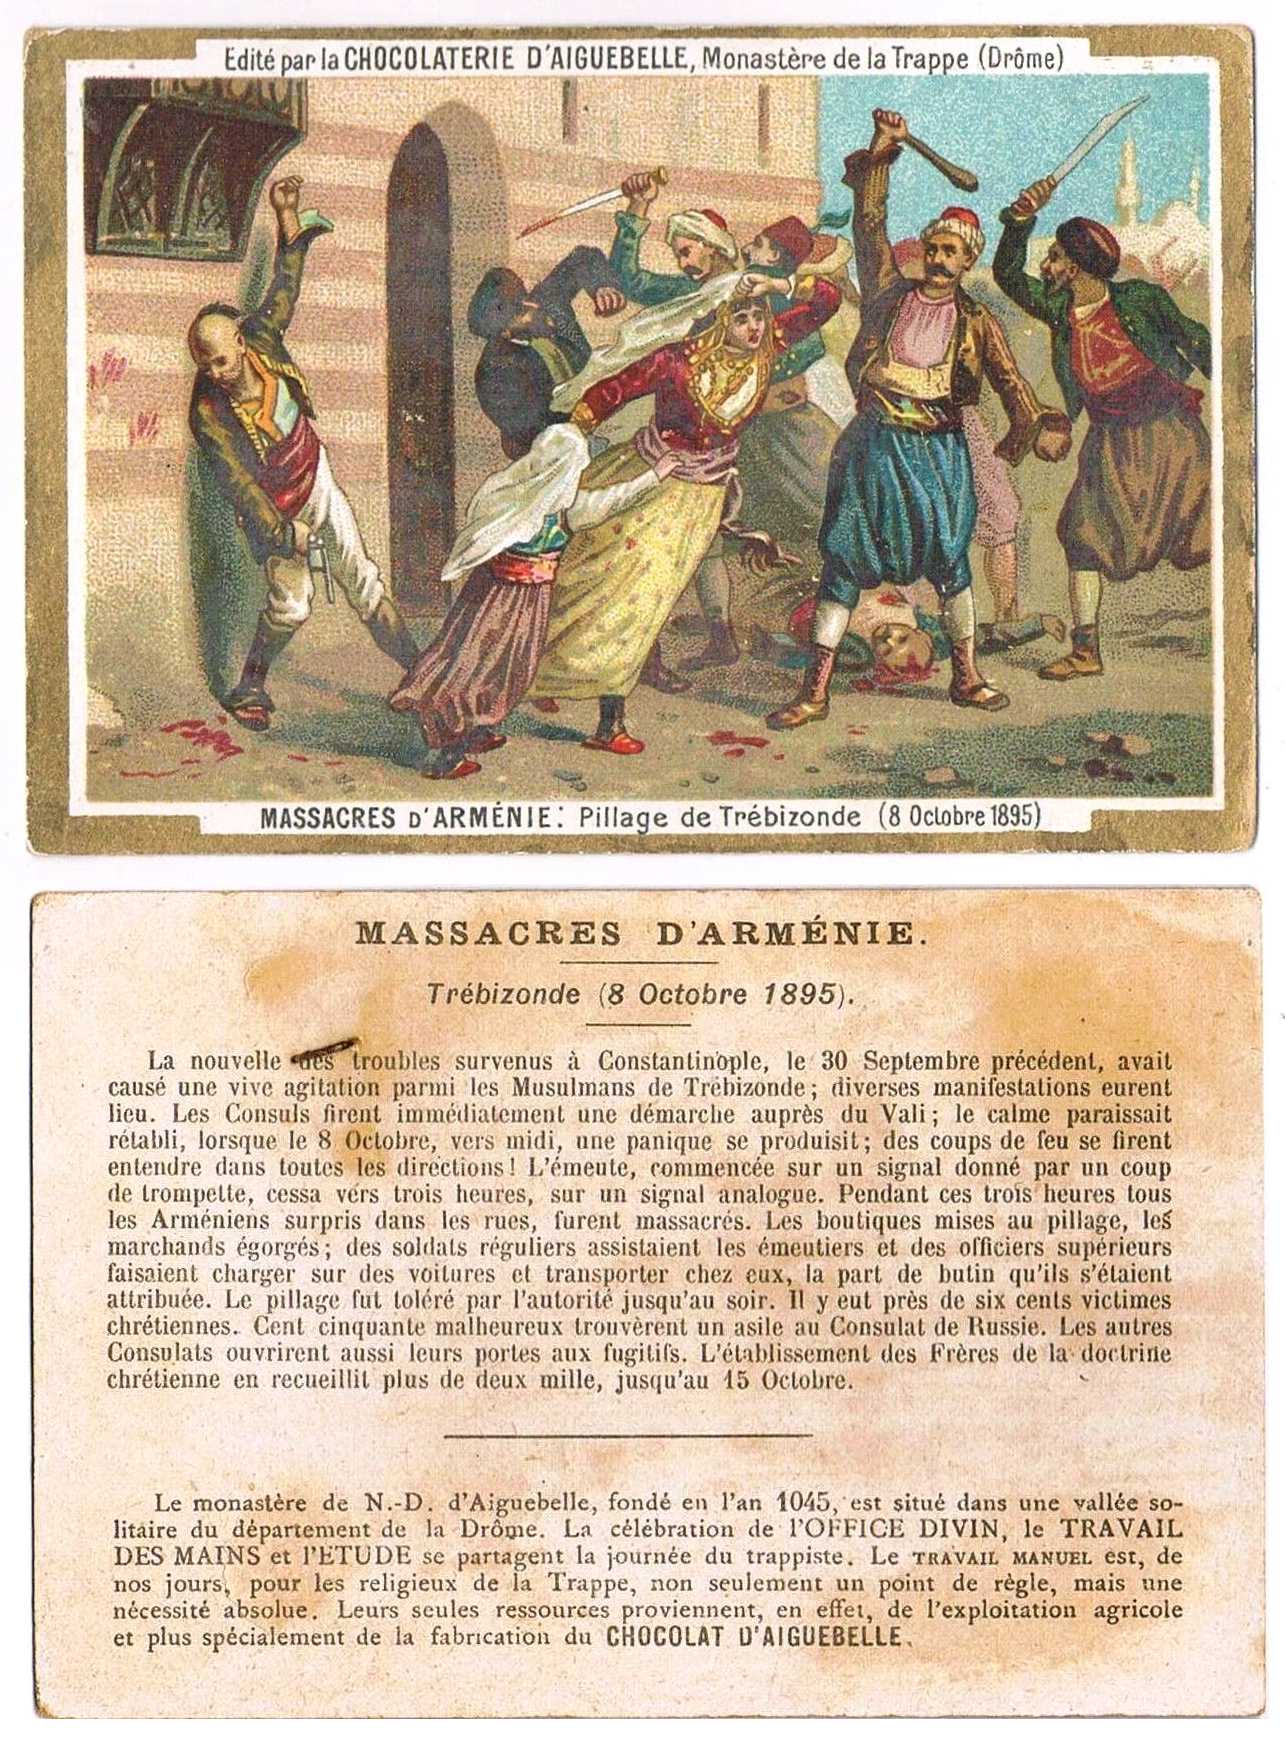 1895 Massacre d'Armenie, Chromo, Chocolaterie d'Aiguebelle 8 10 1895